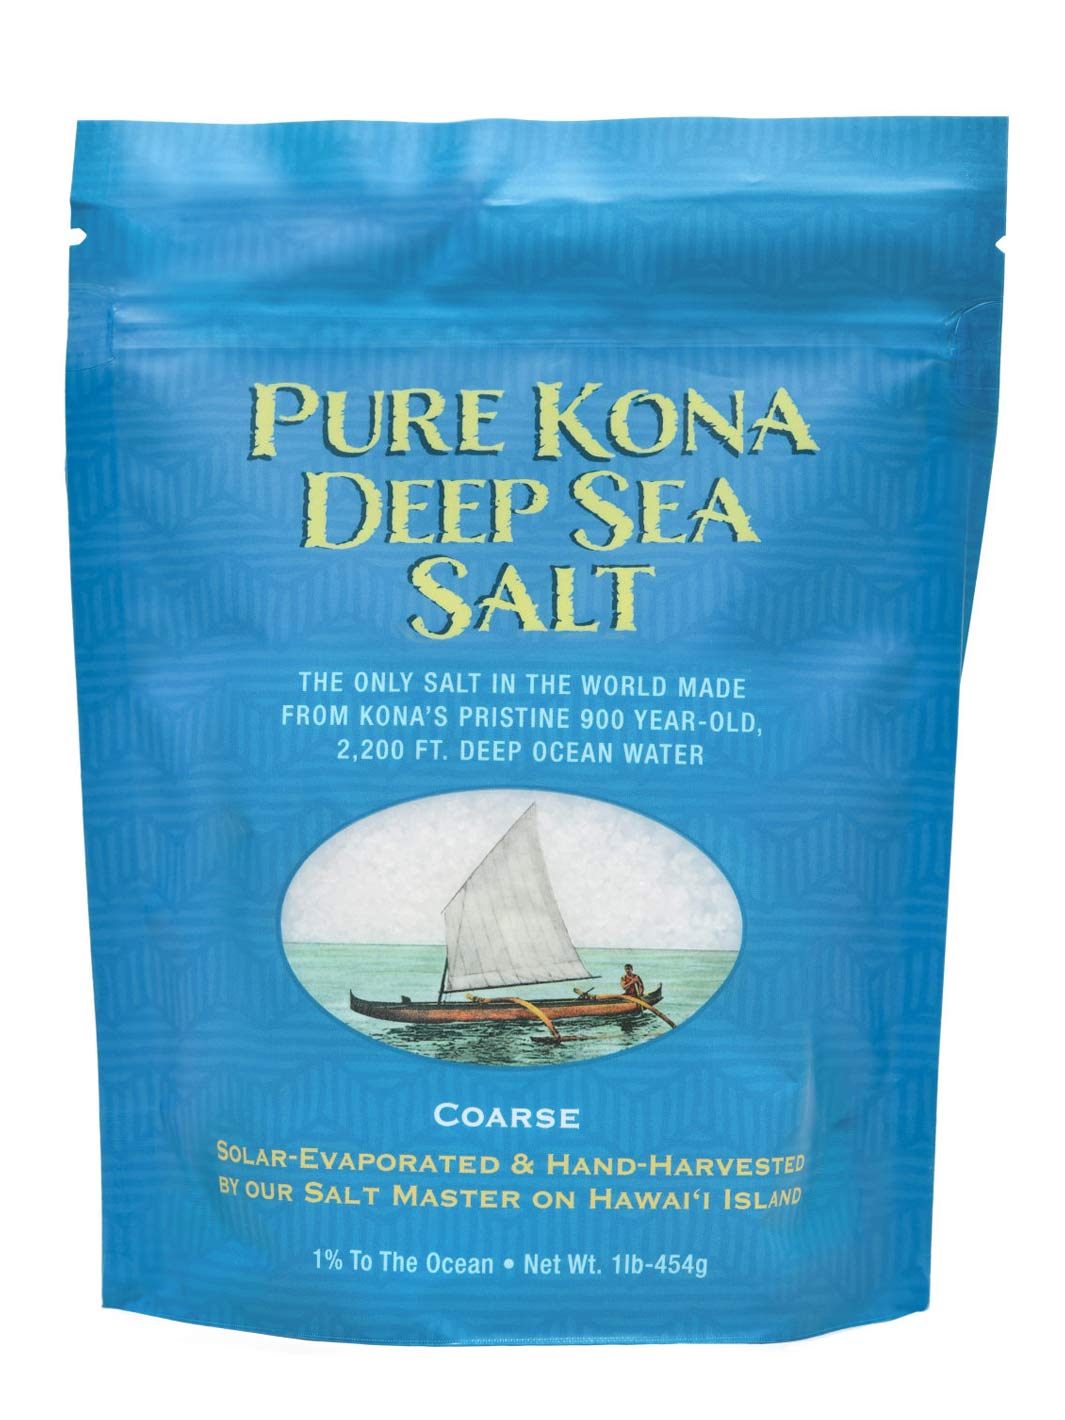 Pop-Up Mākeke - Sea Salts of Hawaii - Pure Kona Grinder Sea Salt Pouch - 1lb - Front View